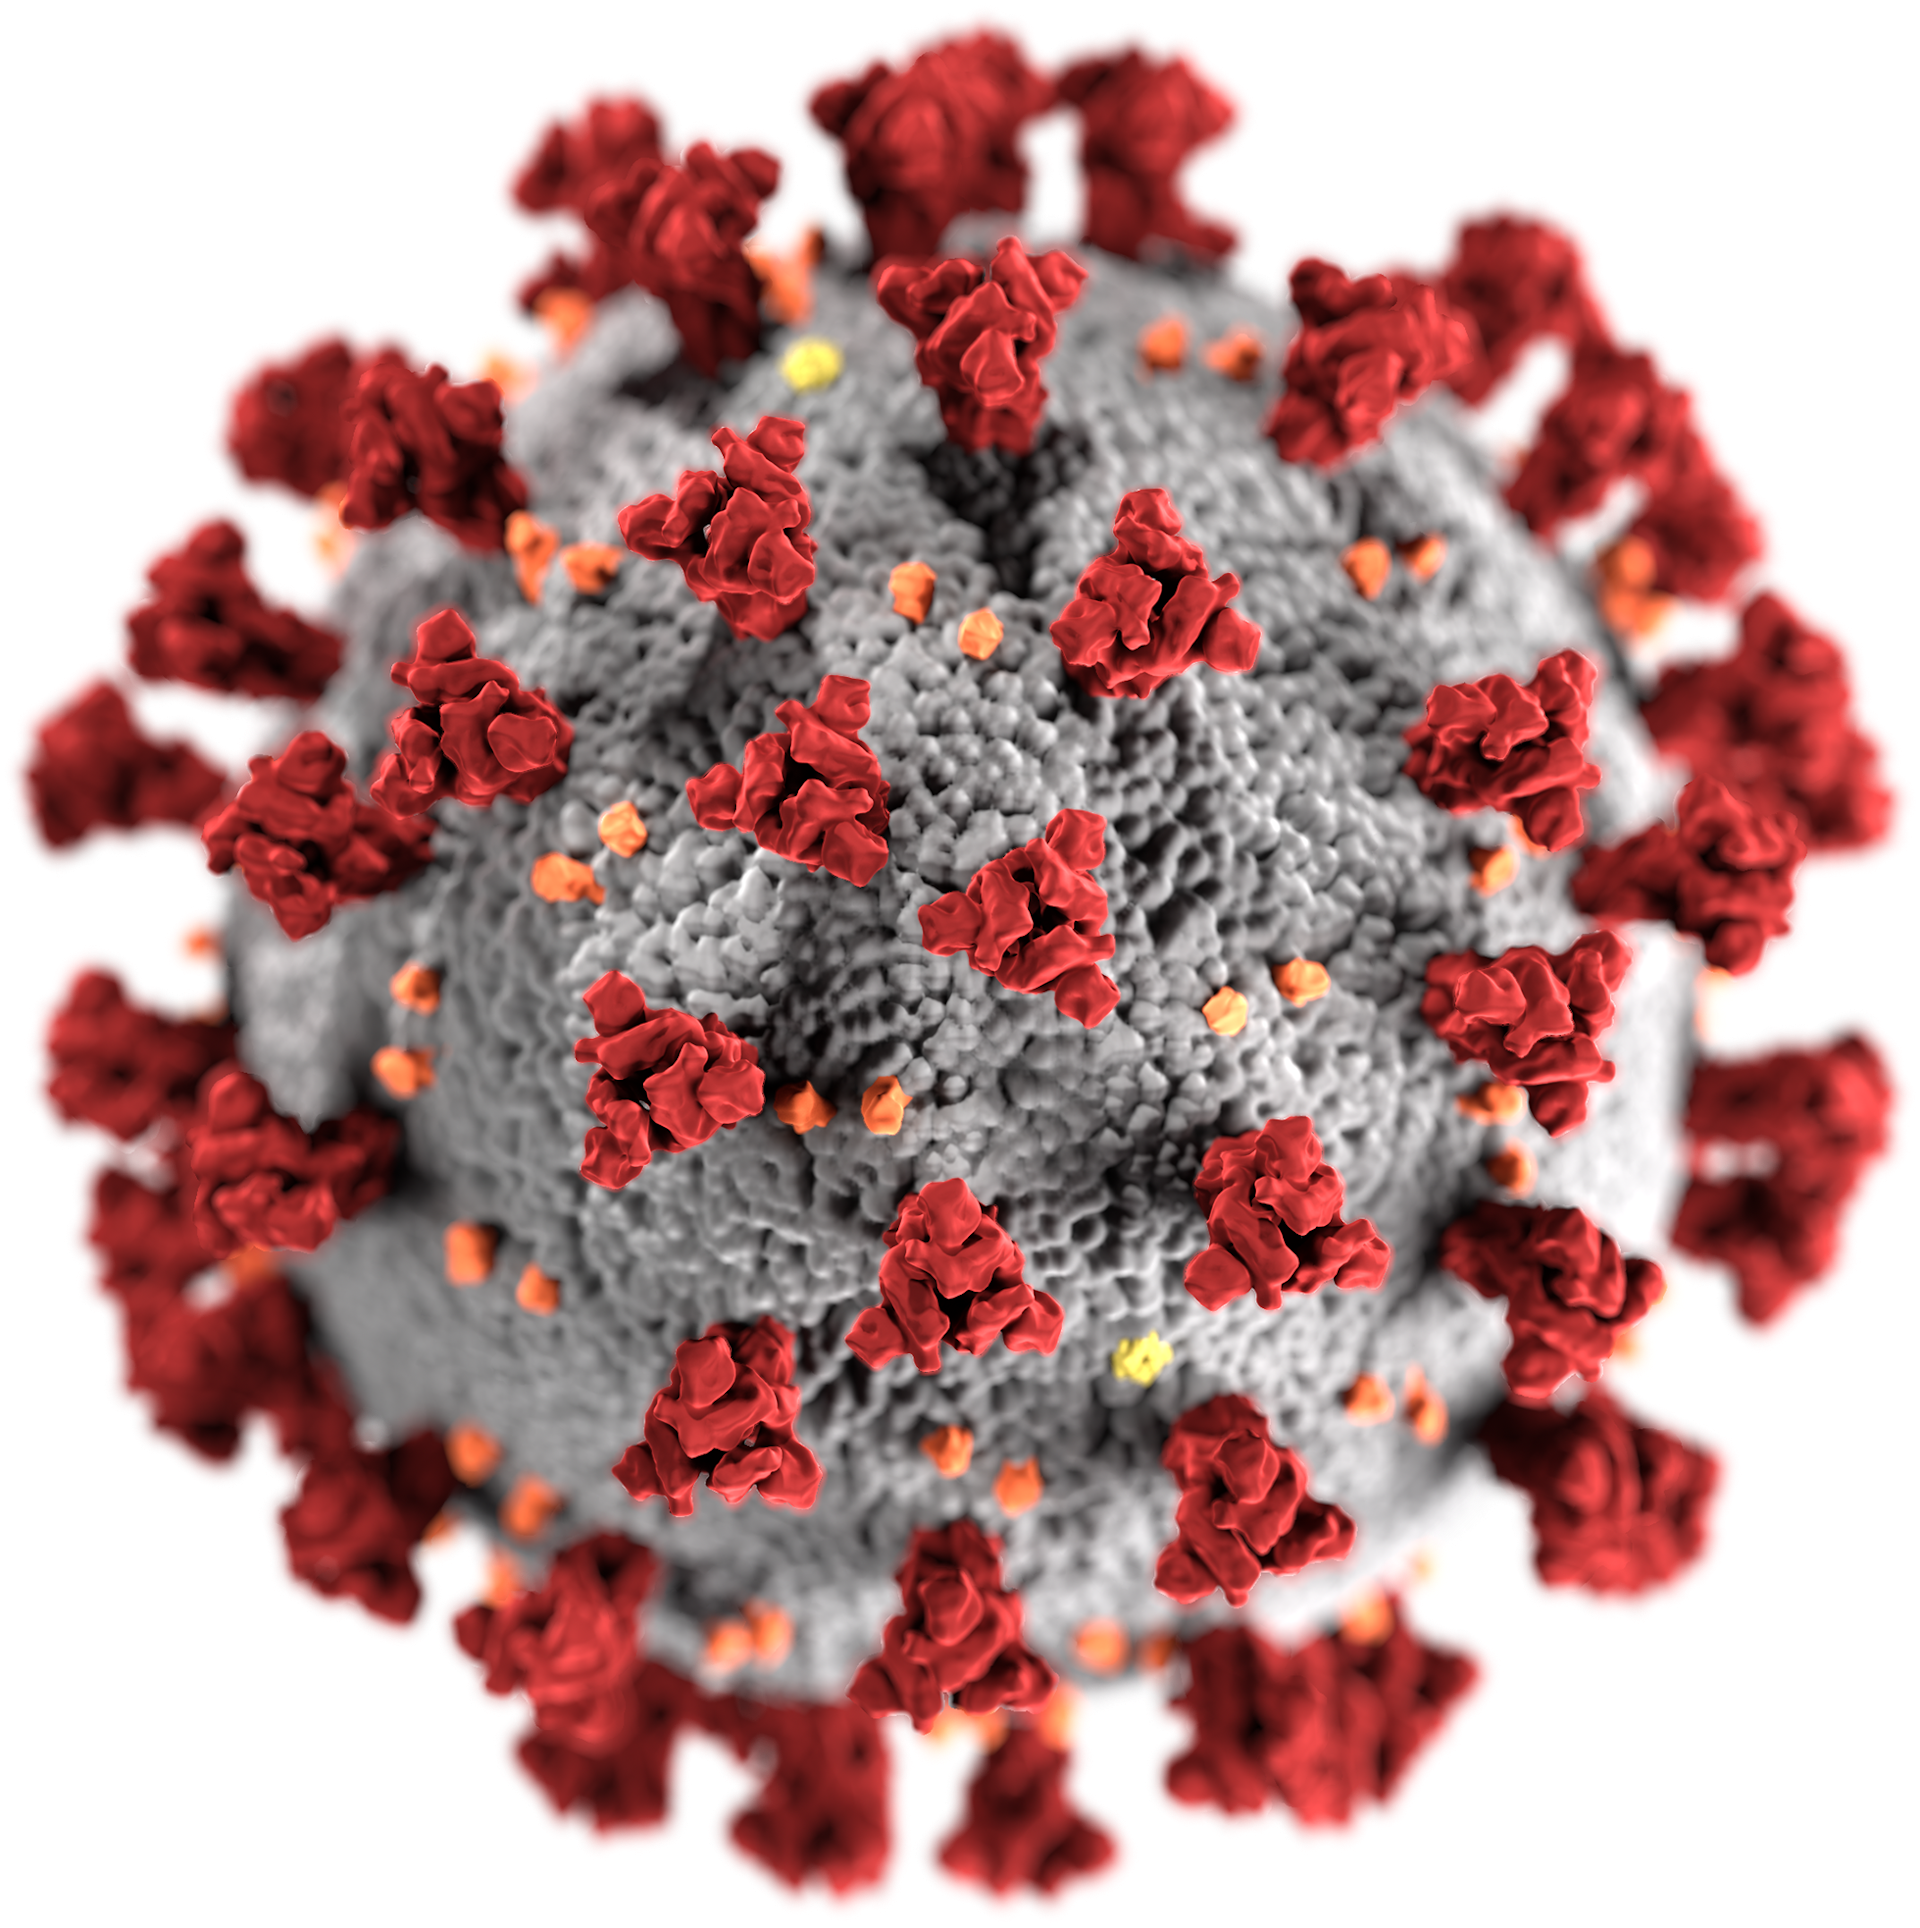 weatherbug viruses